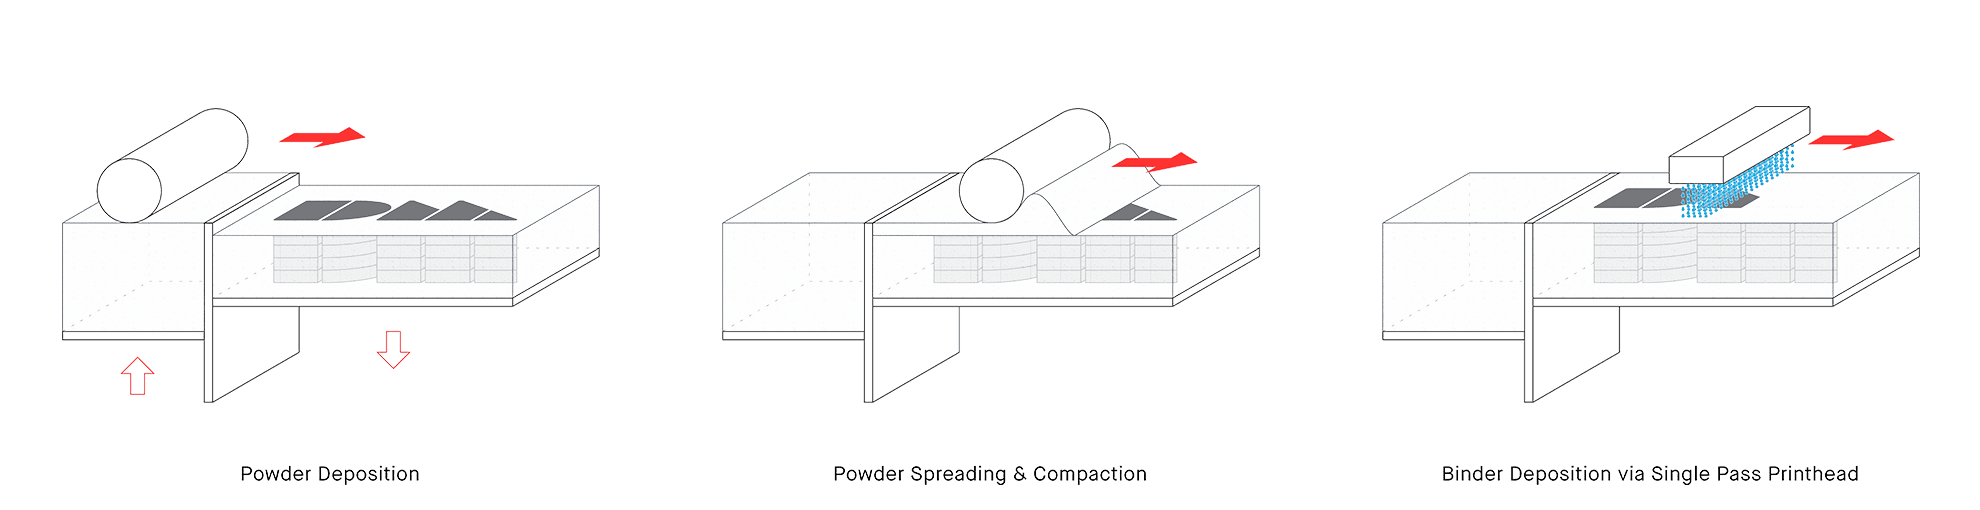 Metal Binder Jetting Process